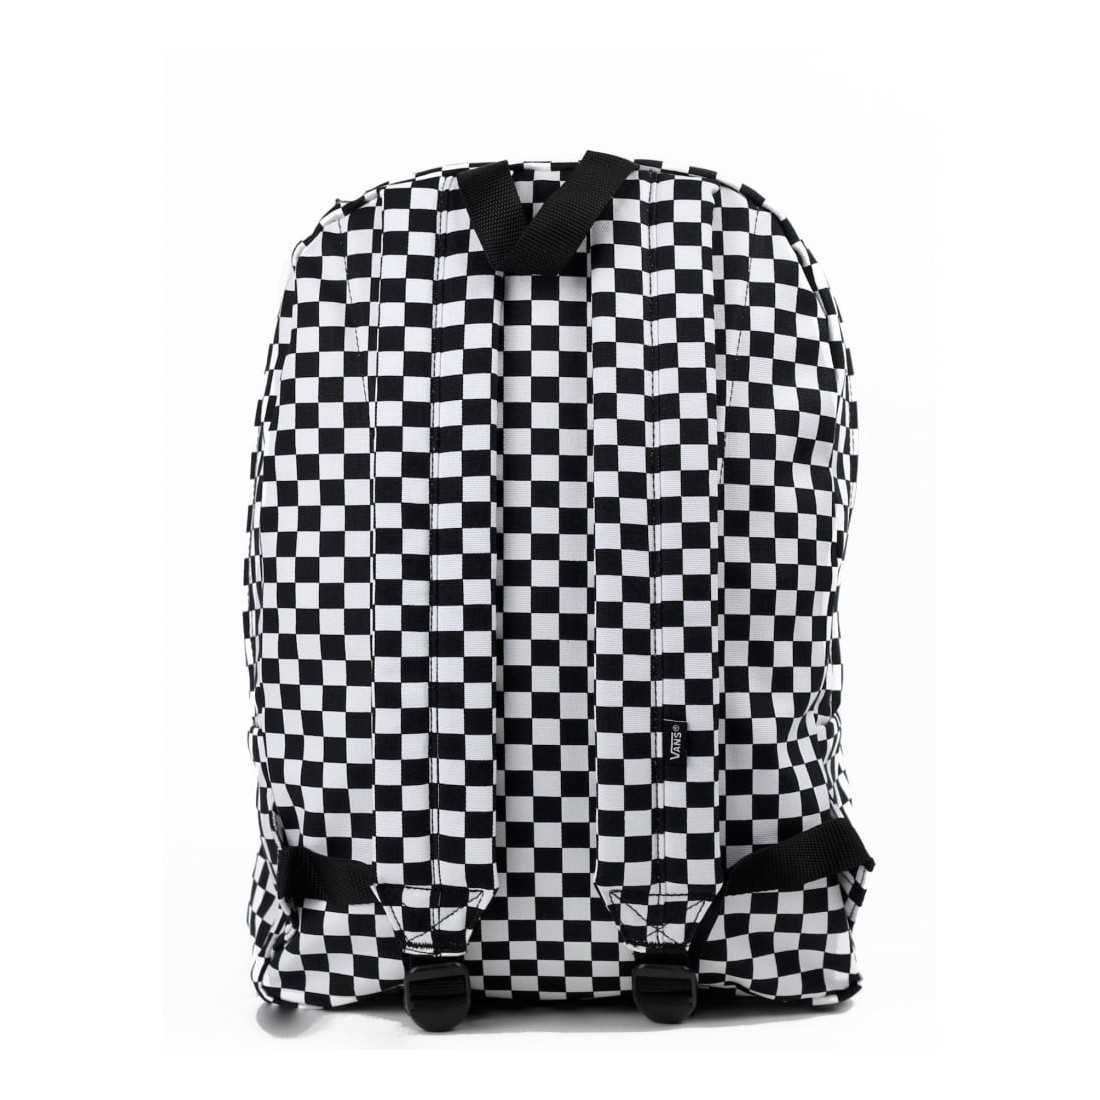 Plecak młodzieżowy Vans Old Skool II Black/White Check szachownica - plecak-tornister.pl